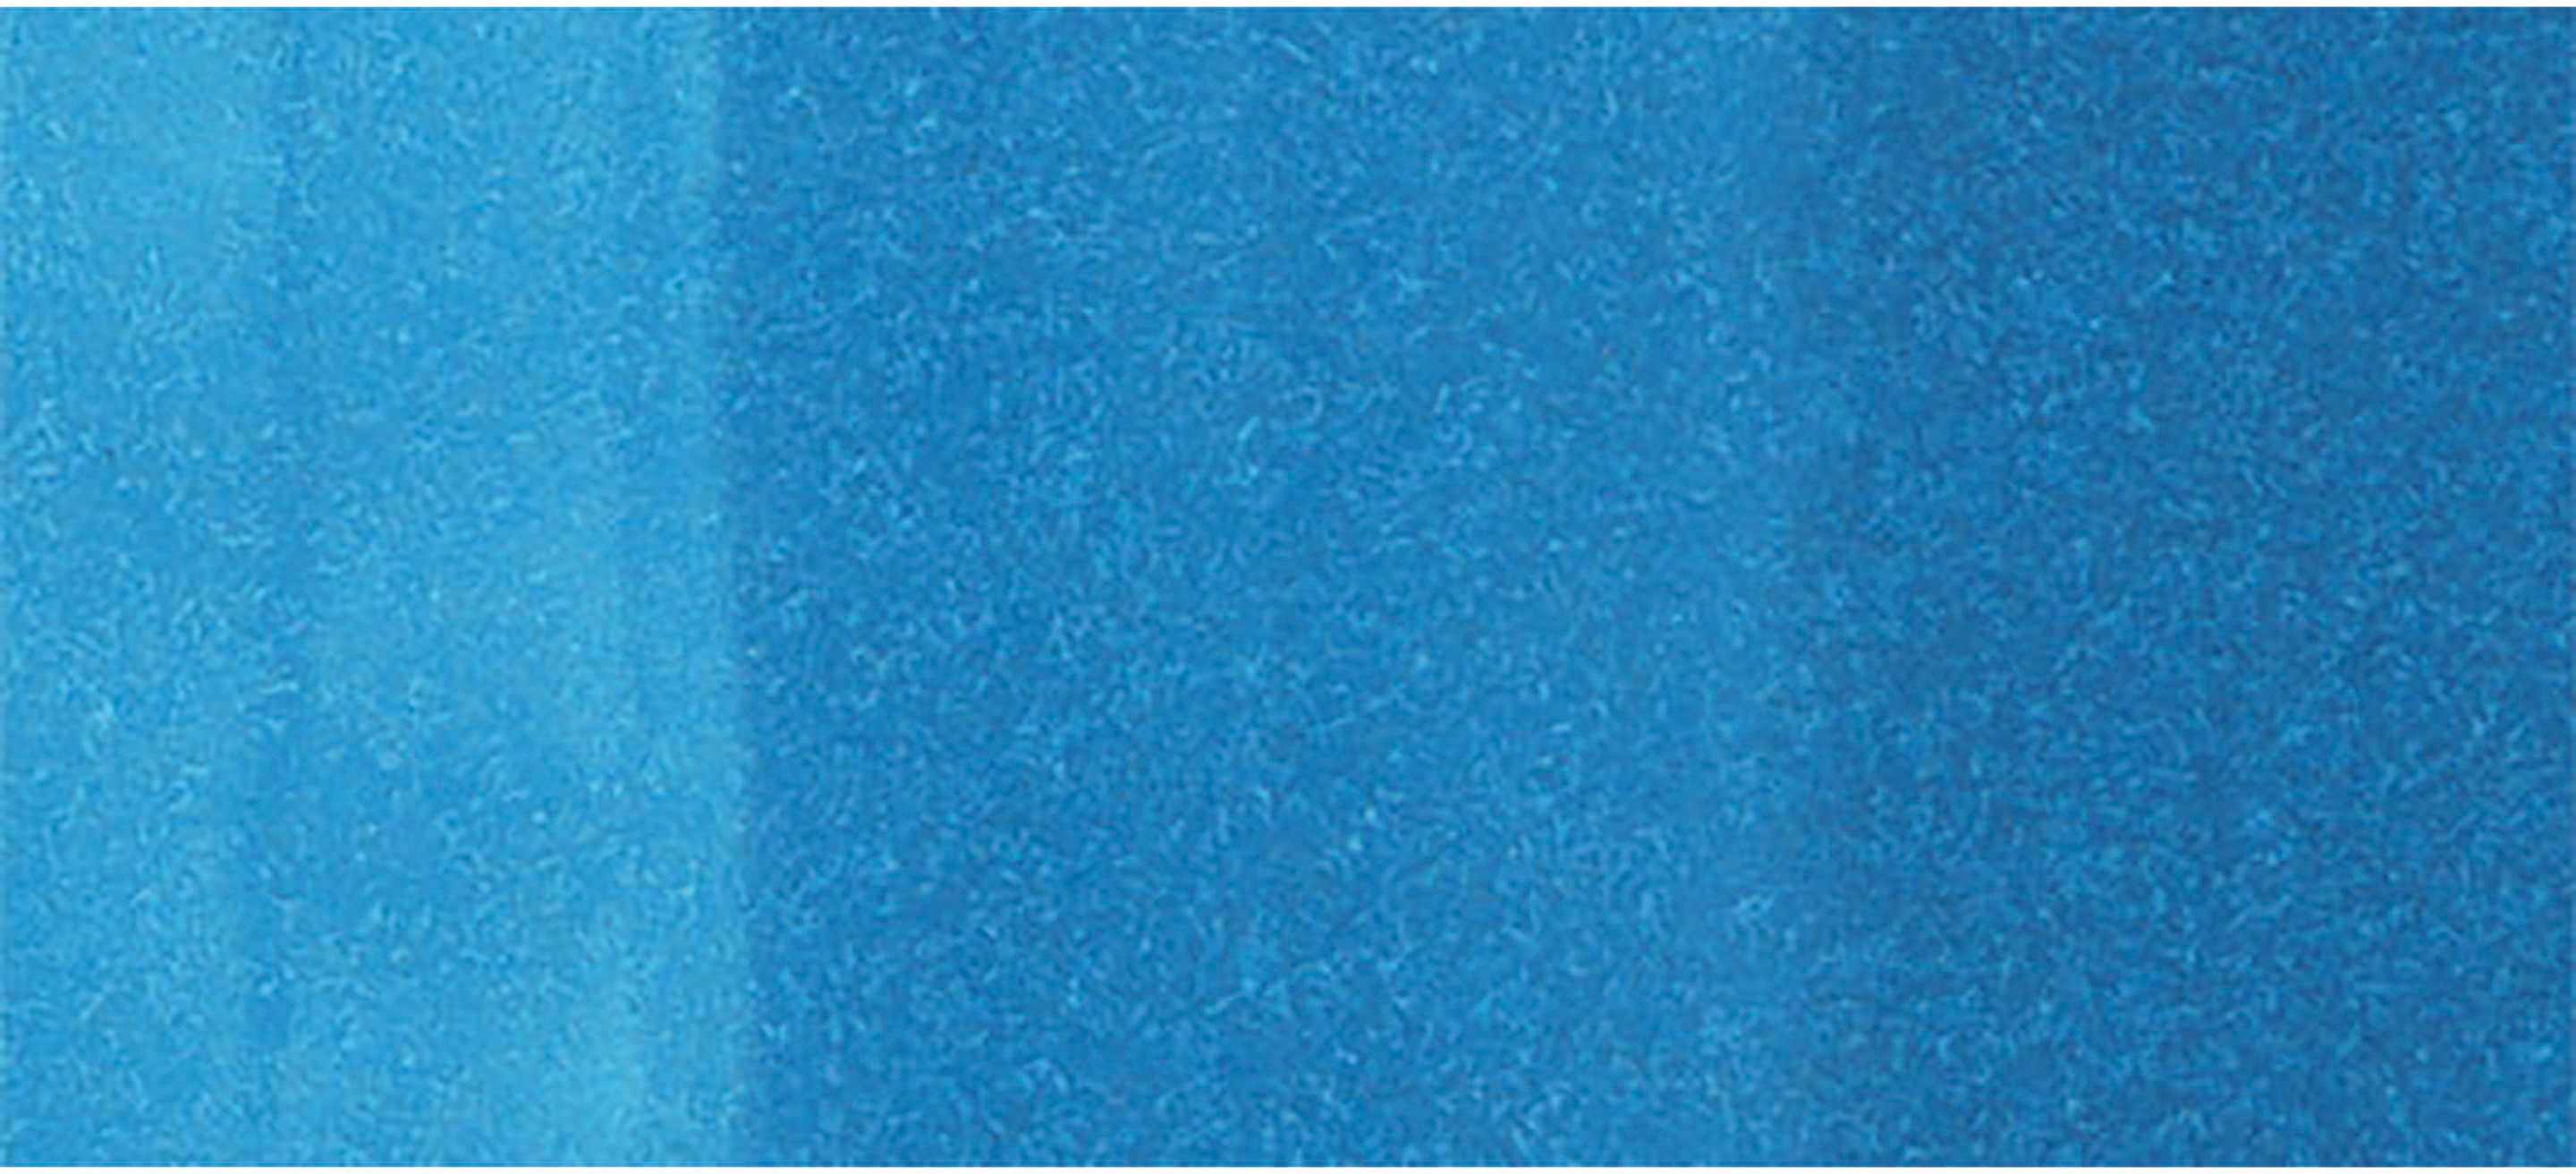 COPIC Marker Classic 2007550 B05 - Process Blue